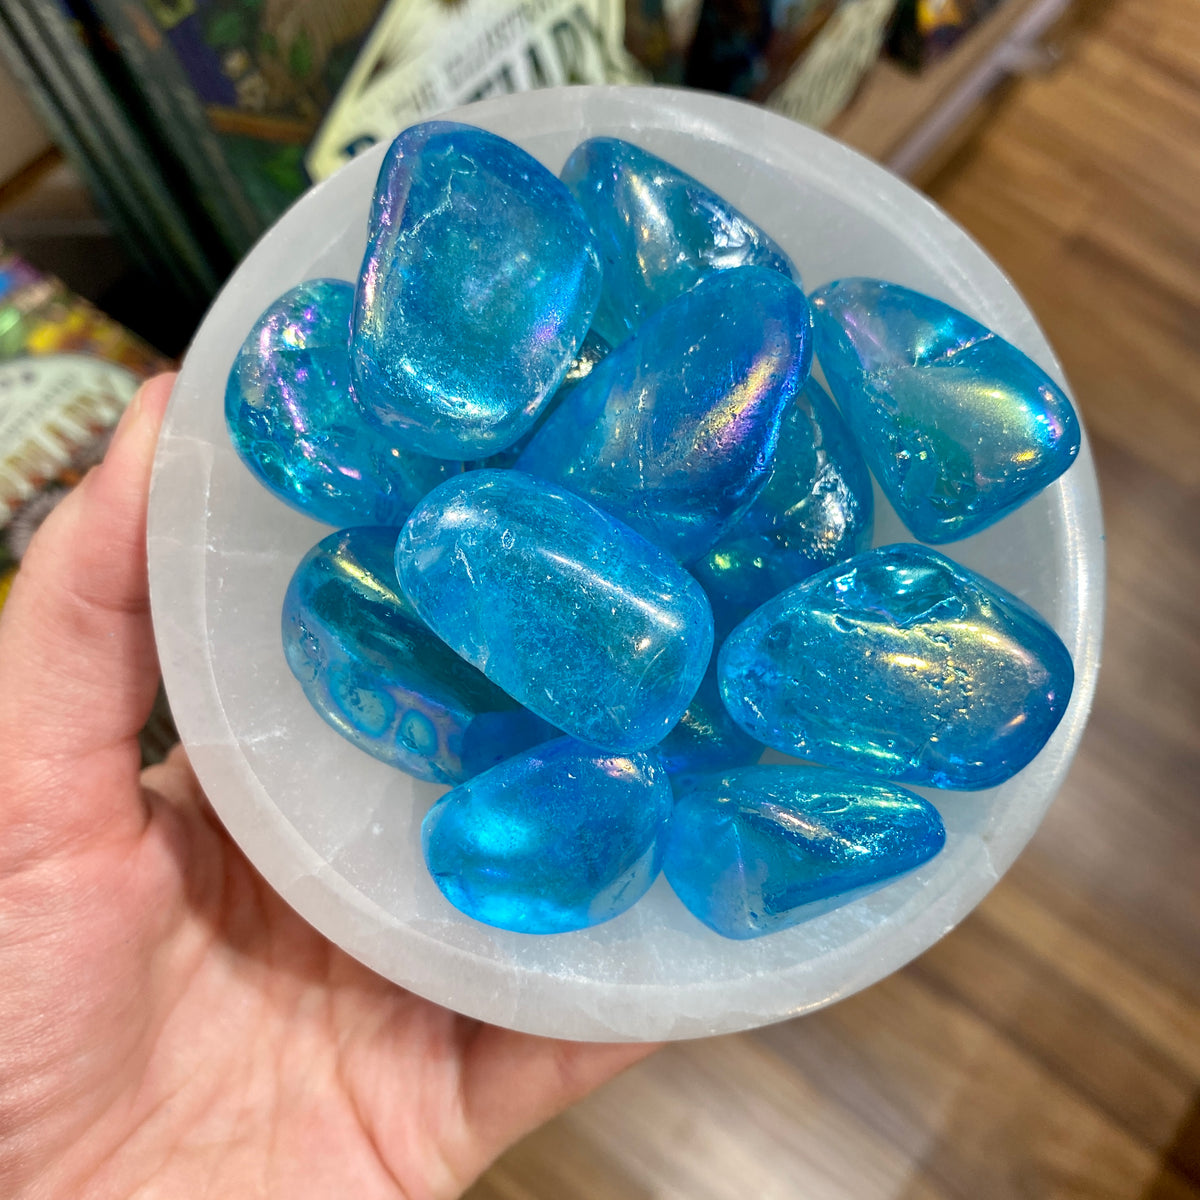 Tiny polished stones (4 oz), rock confetti, colorful planter stones, t –  Midwest Shores